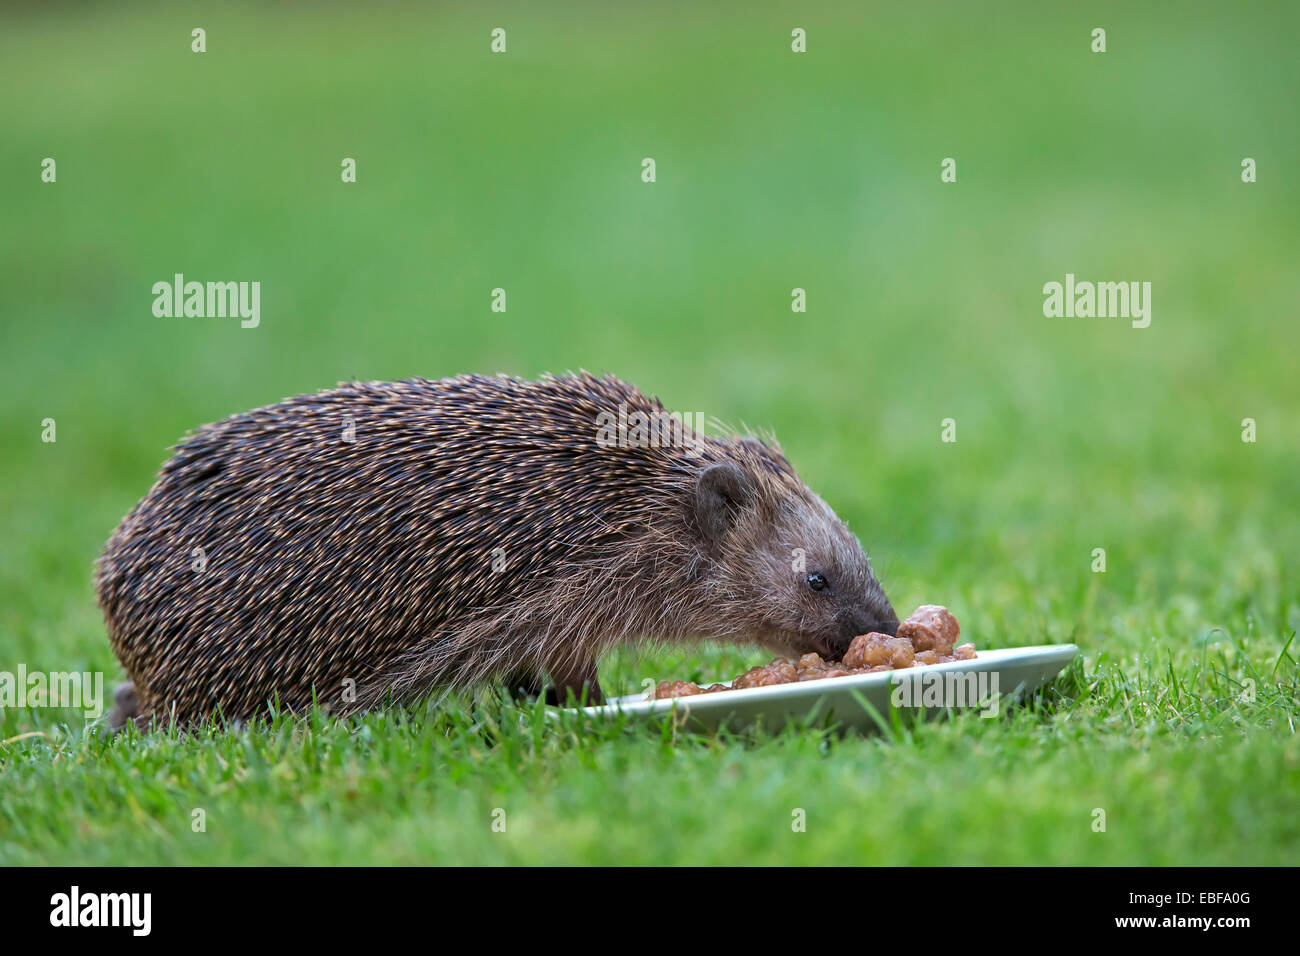 Common hedgehog, Schleswig Holstein, Germany, Europe / Erinaceus europ Stock Photo